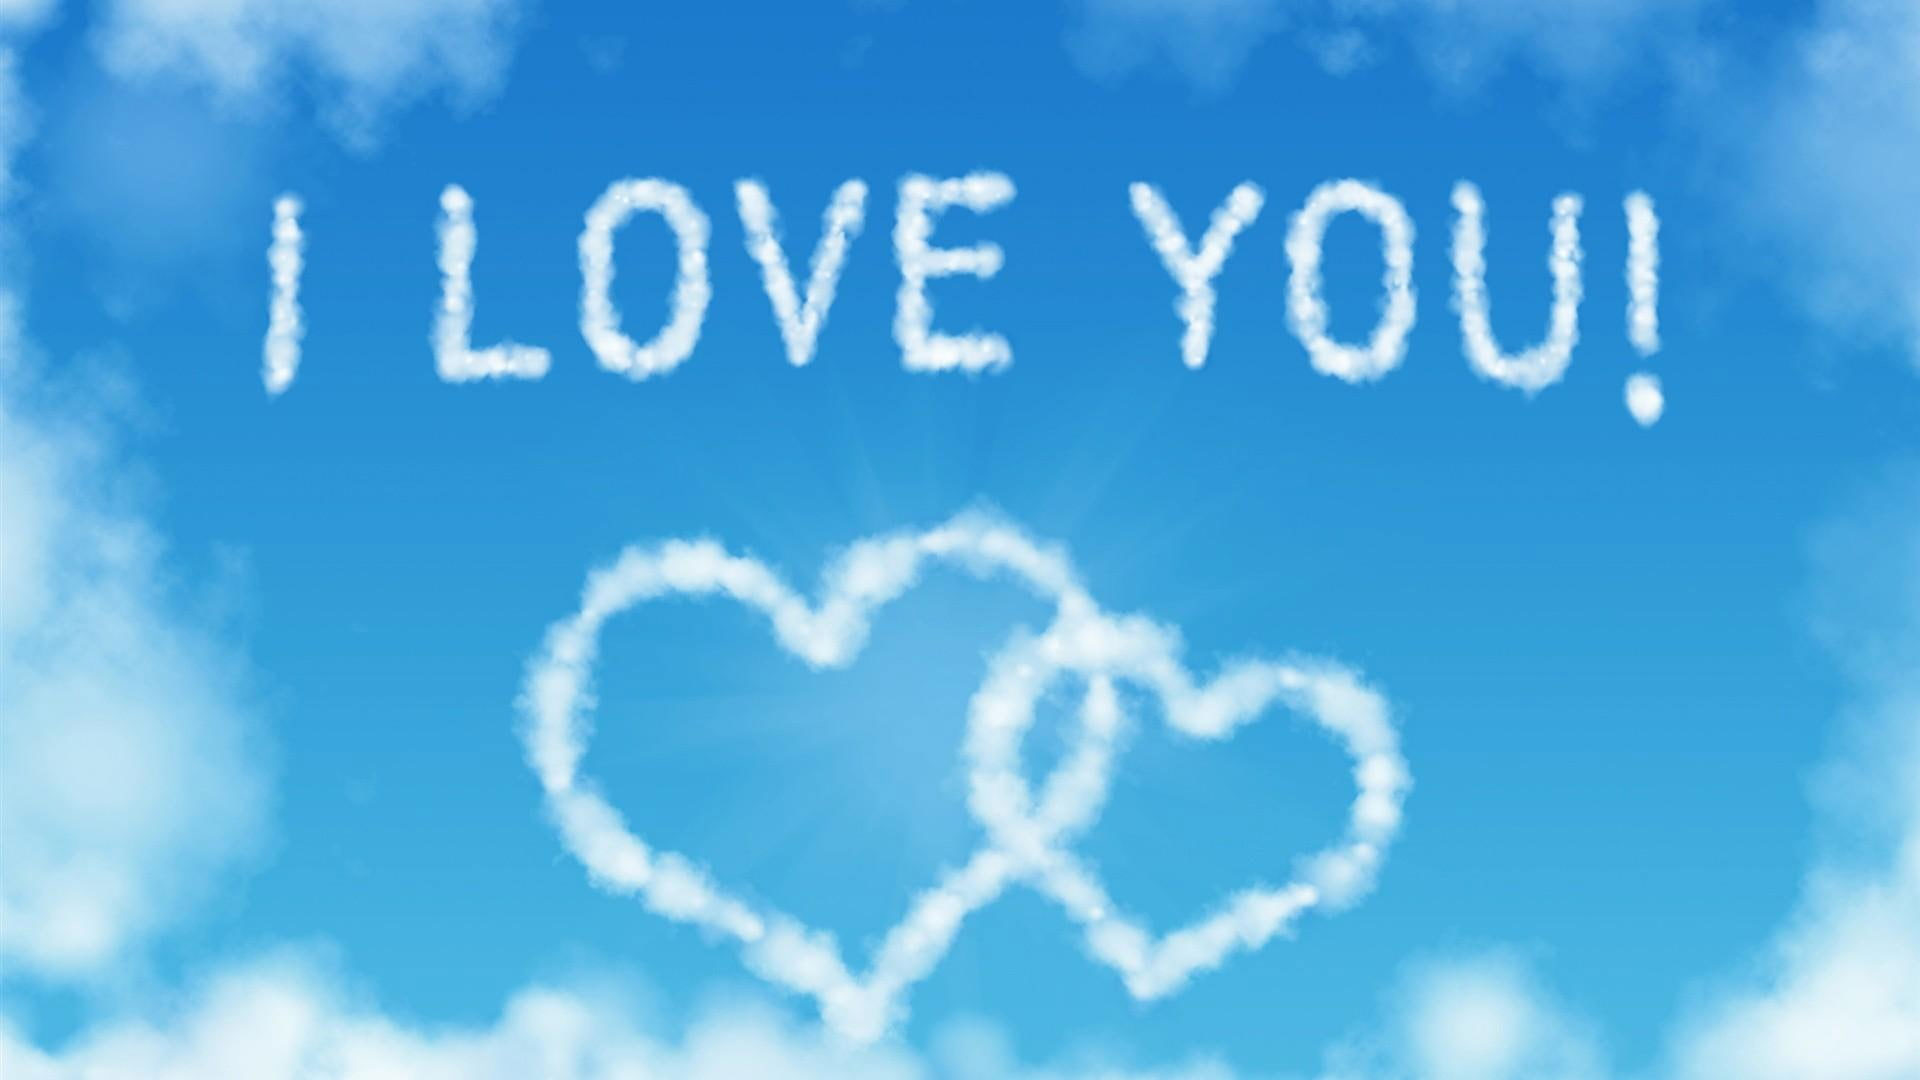 Love Wallpaper, I Love You, Clouds, Heart, Hearts, Romantic - Wallpaperforu